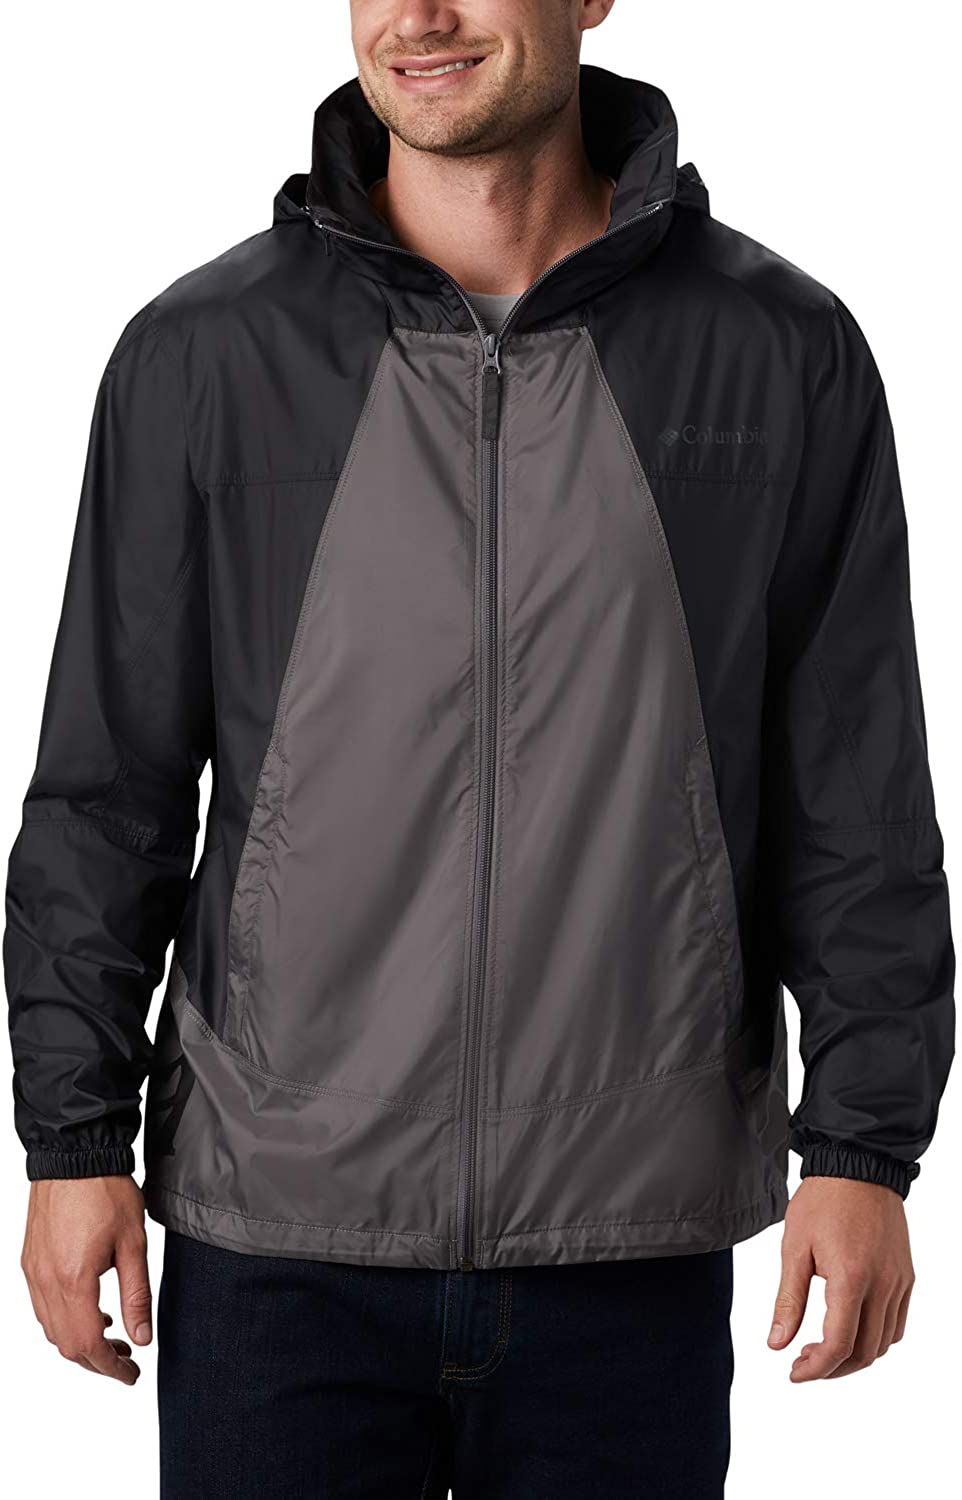 Sunproof UV-Protective Clothing Lightweight Windbreaker Coat Hooded Sport Jacket 